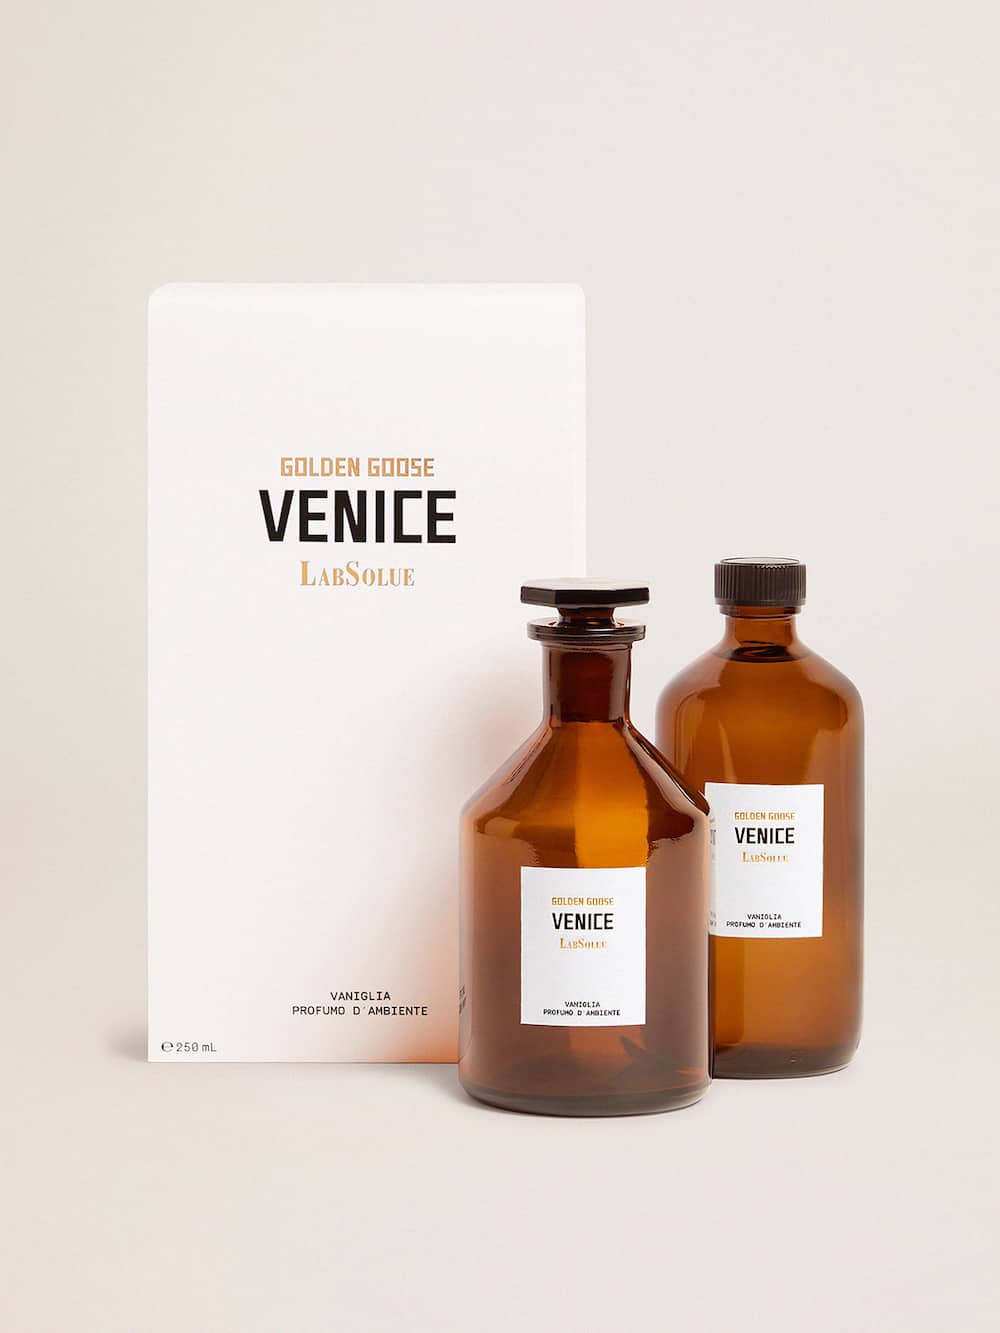 Golden Goose - Venice Essence Vanilla Diffuser 250 ml in 